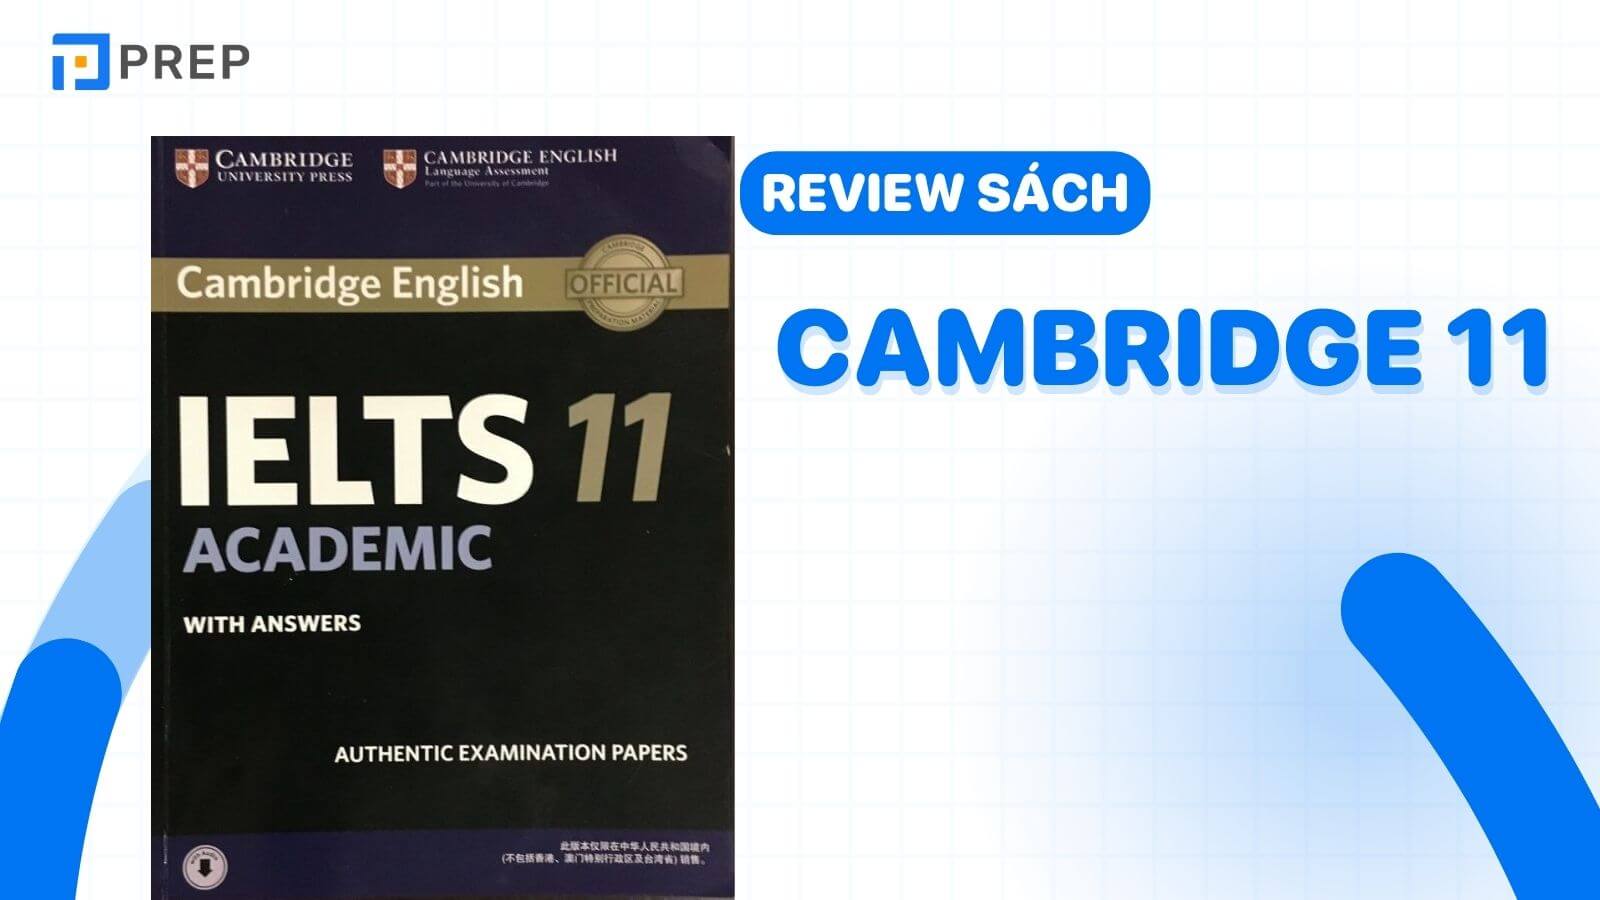 Sách Cambridge 11